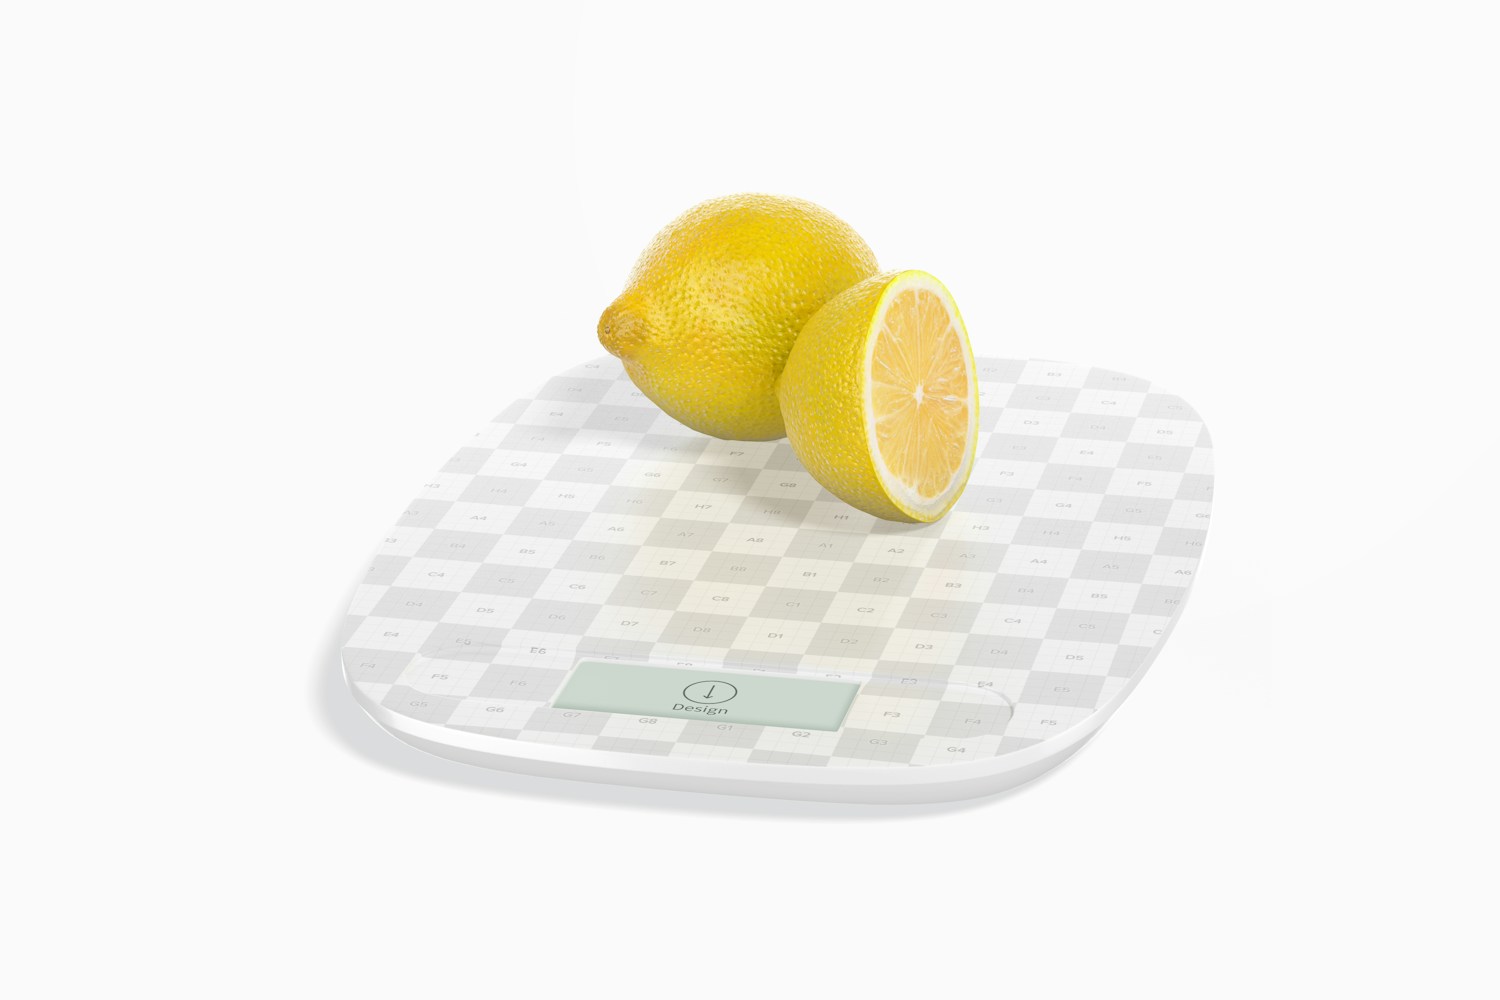 Digital Kitchen Scale Mockup with Lemons